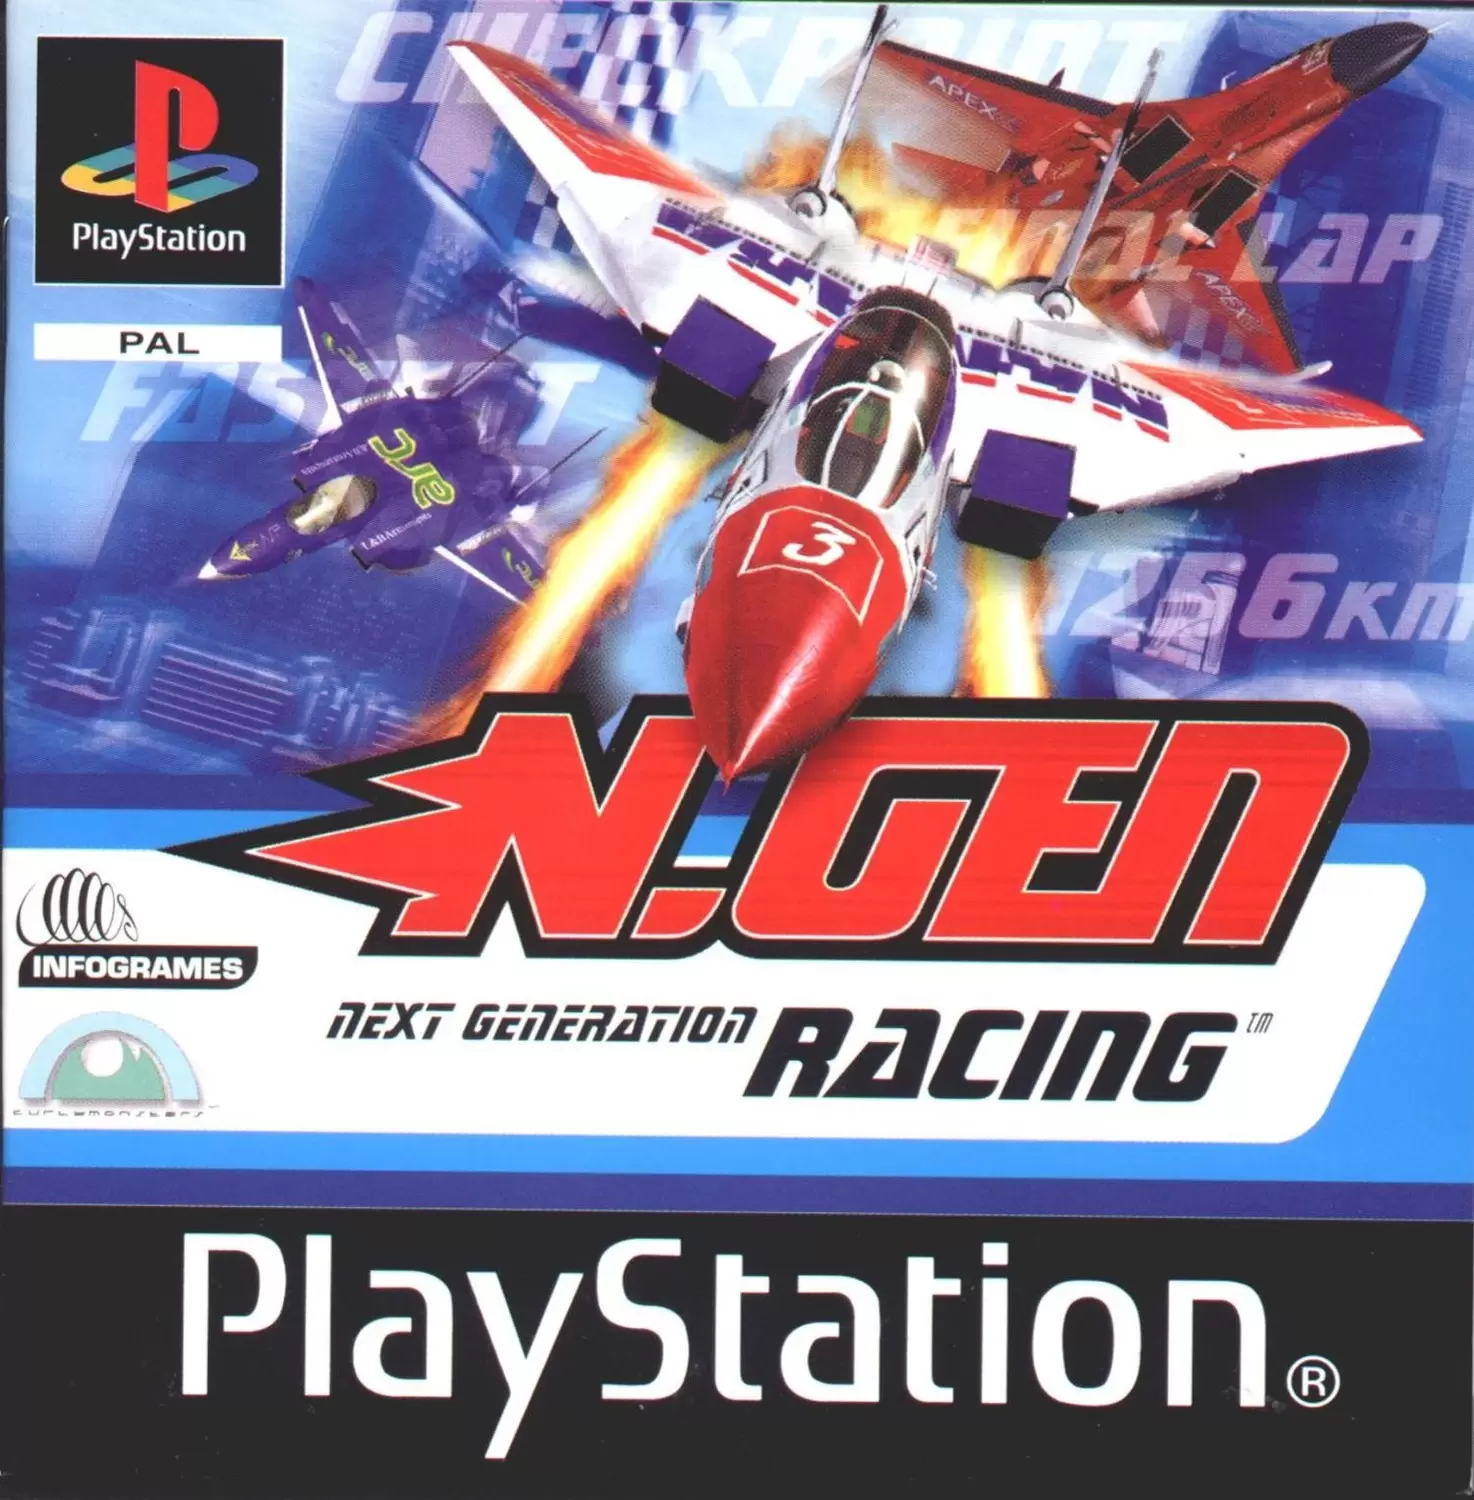 Playstation games - Ngen Racing